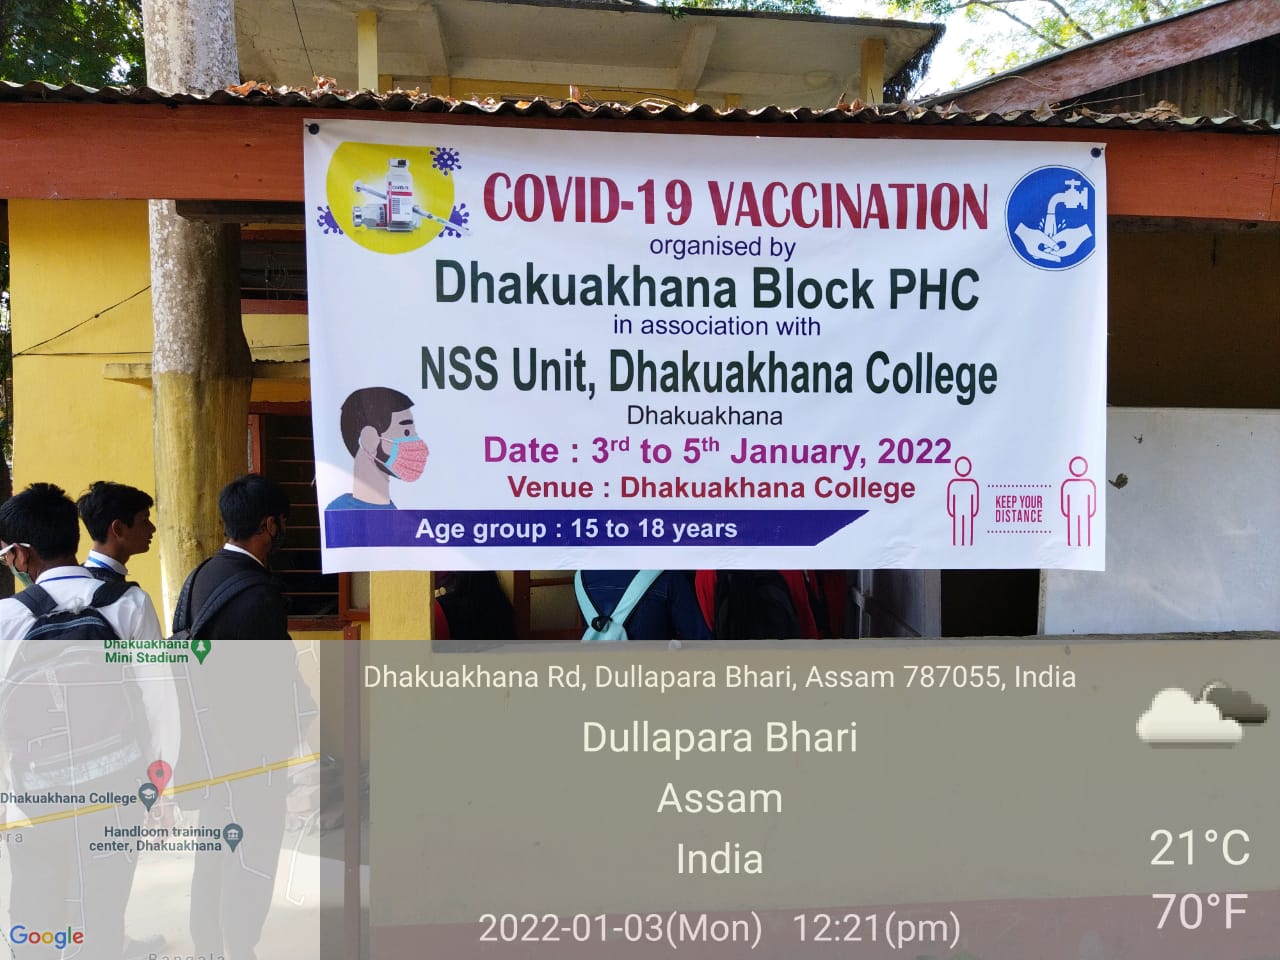 Covid-19 Vaccination Camp